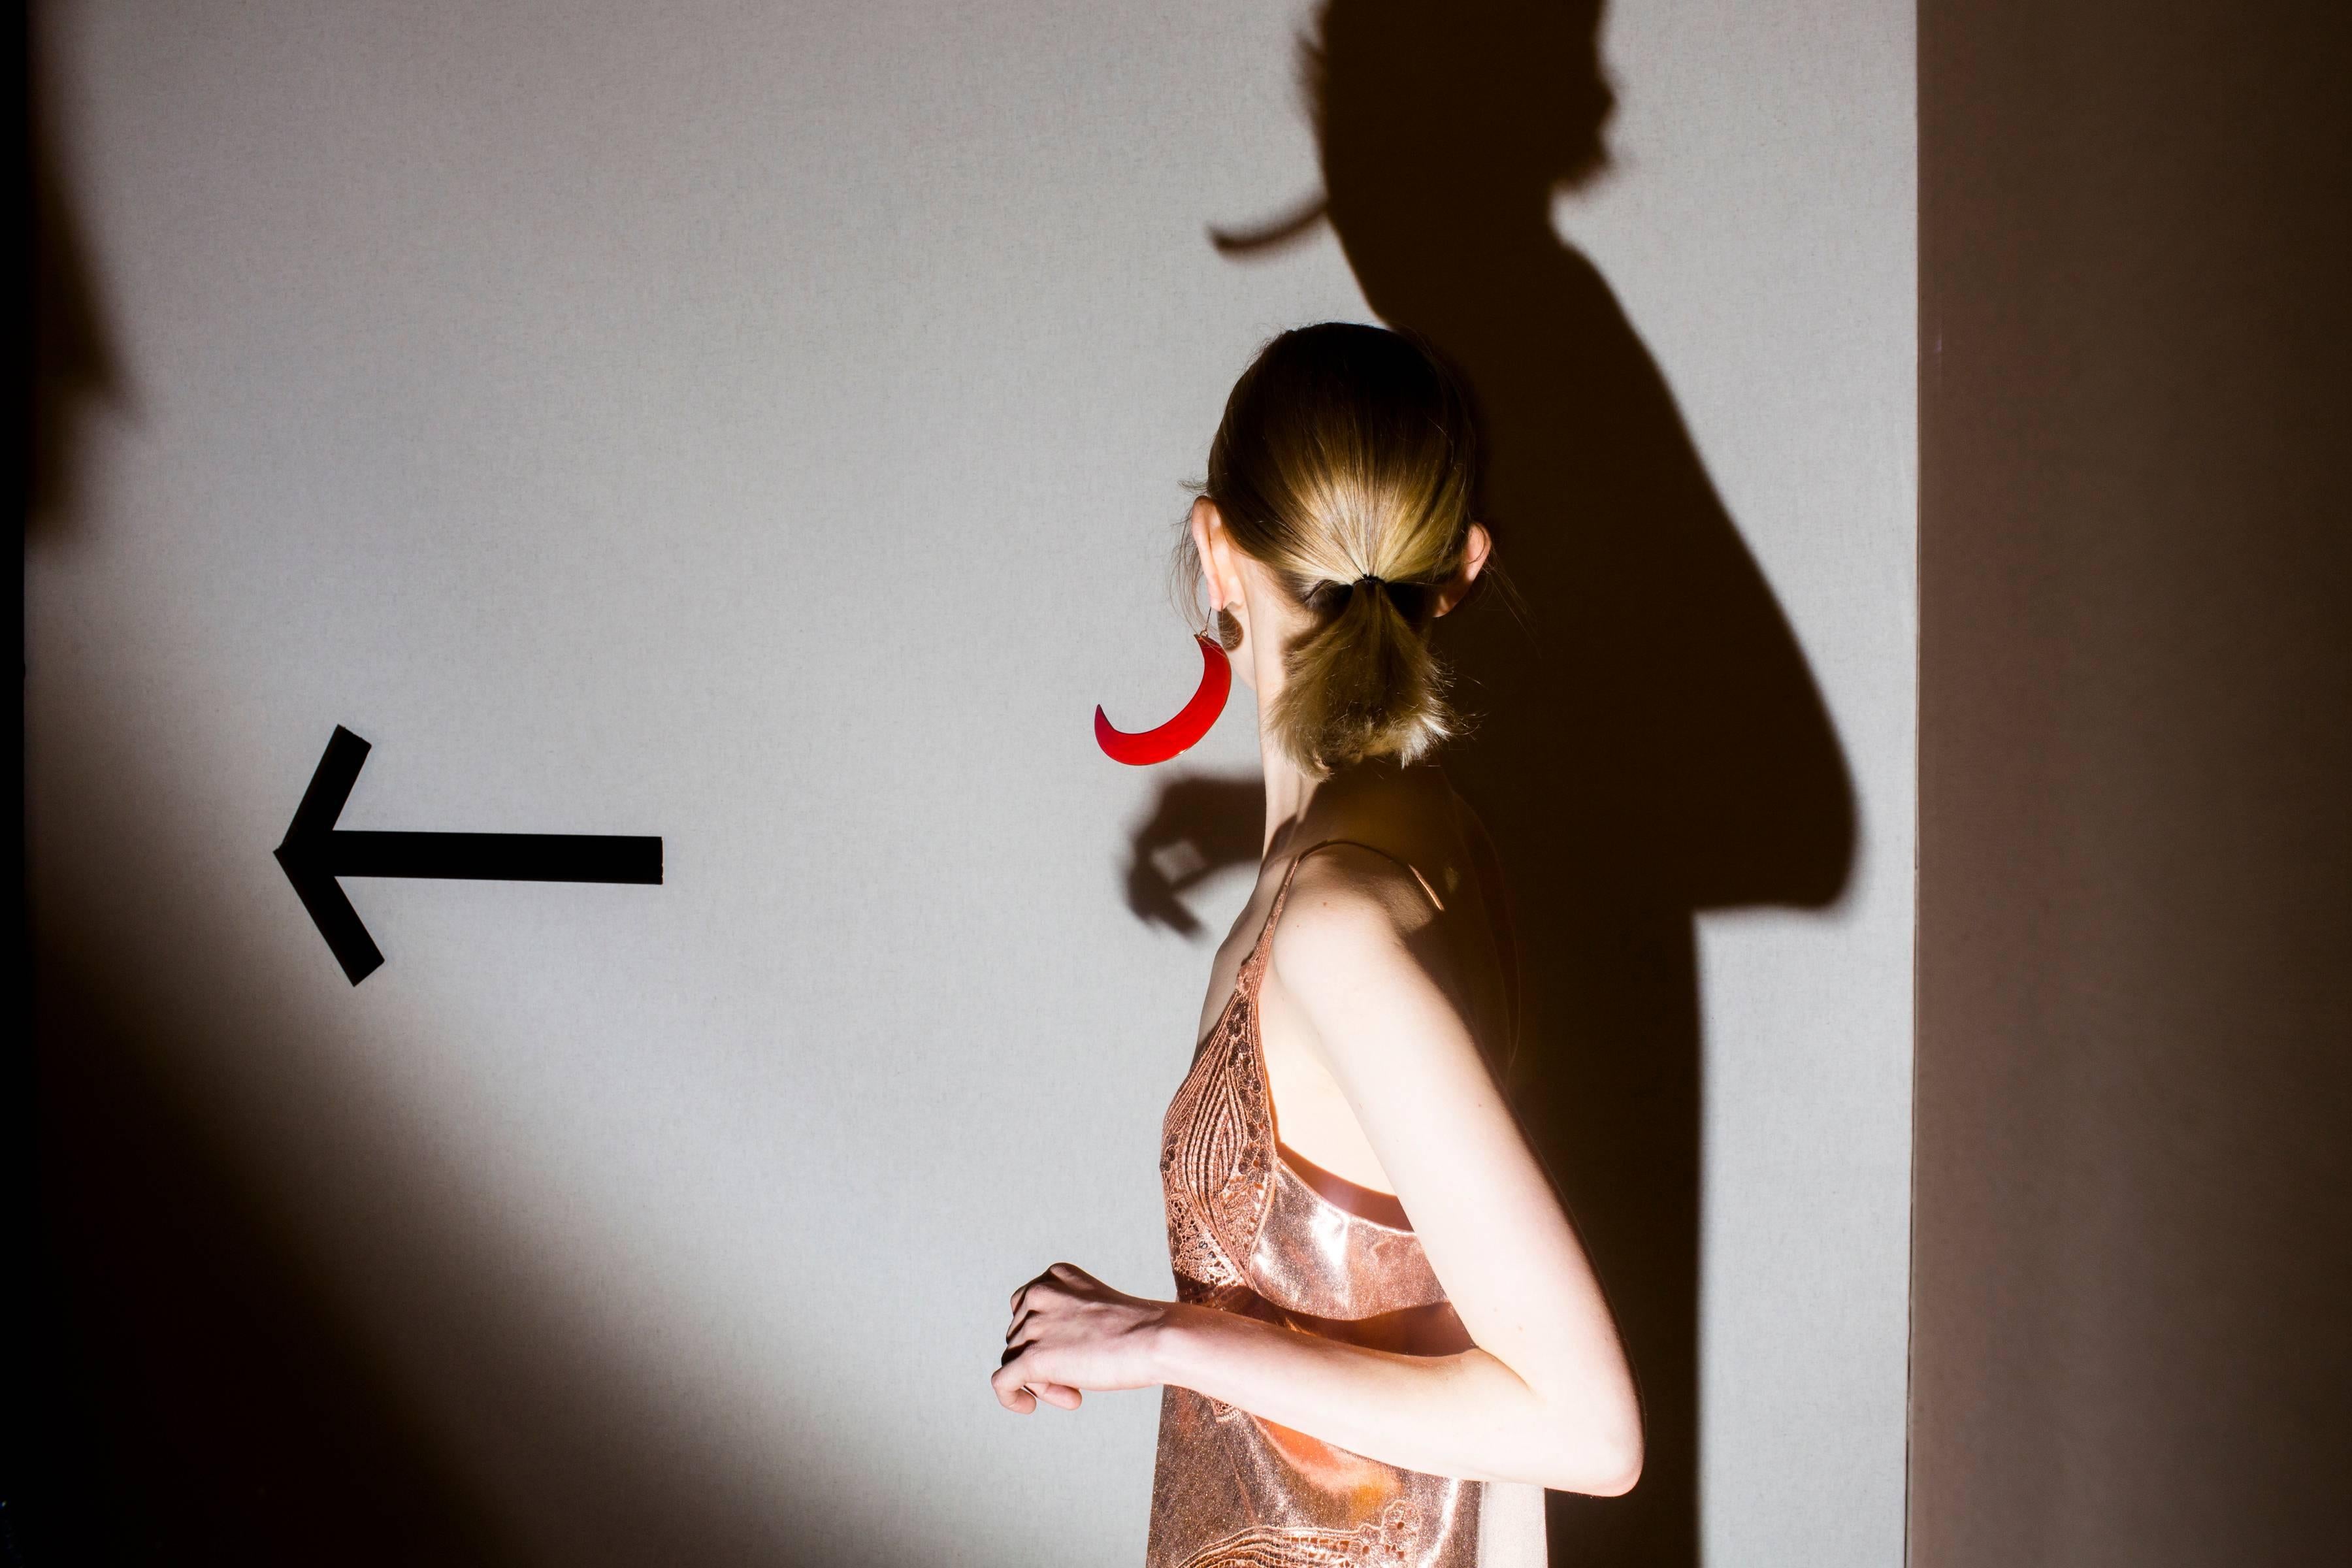 Landon Nordeman Figurative Photograph - "Stella McCartney (Red Earring with Arrow)" - Fashion Photography - Winogrand